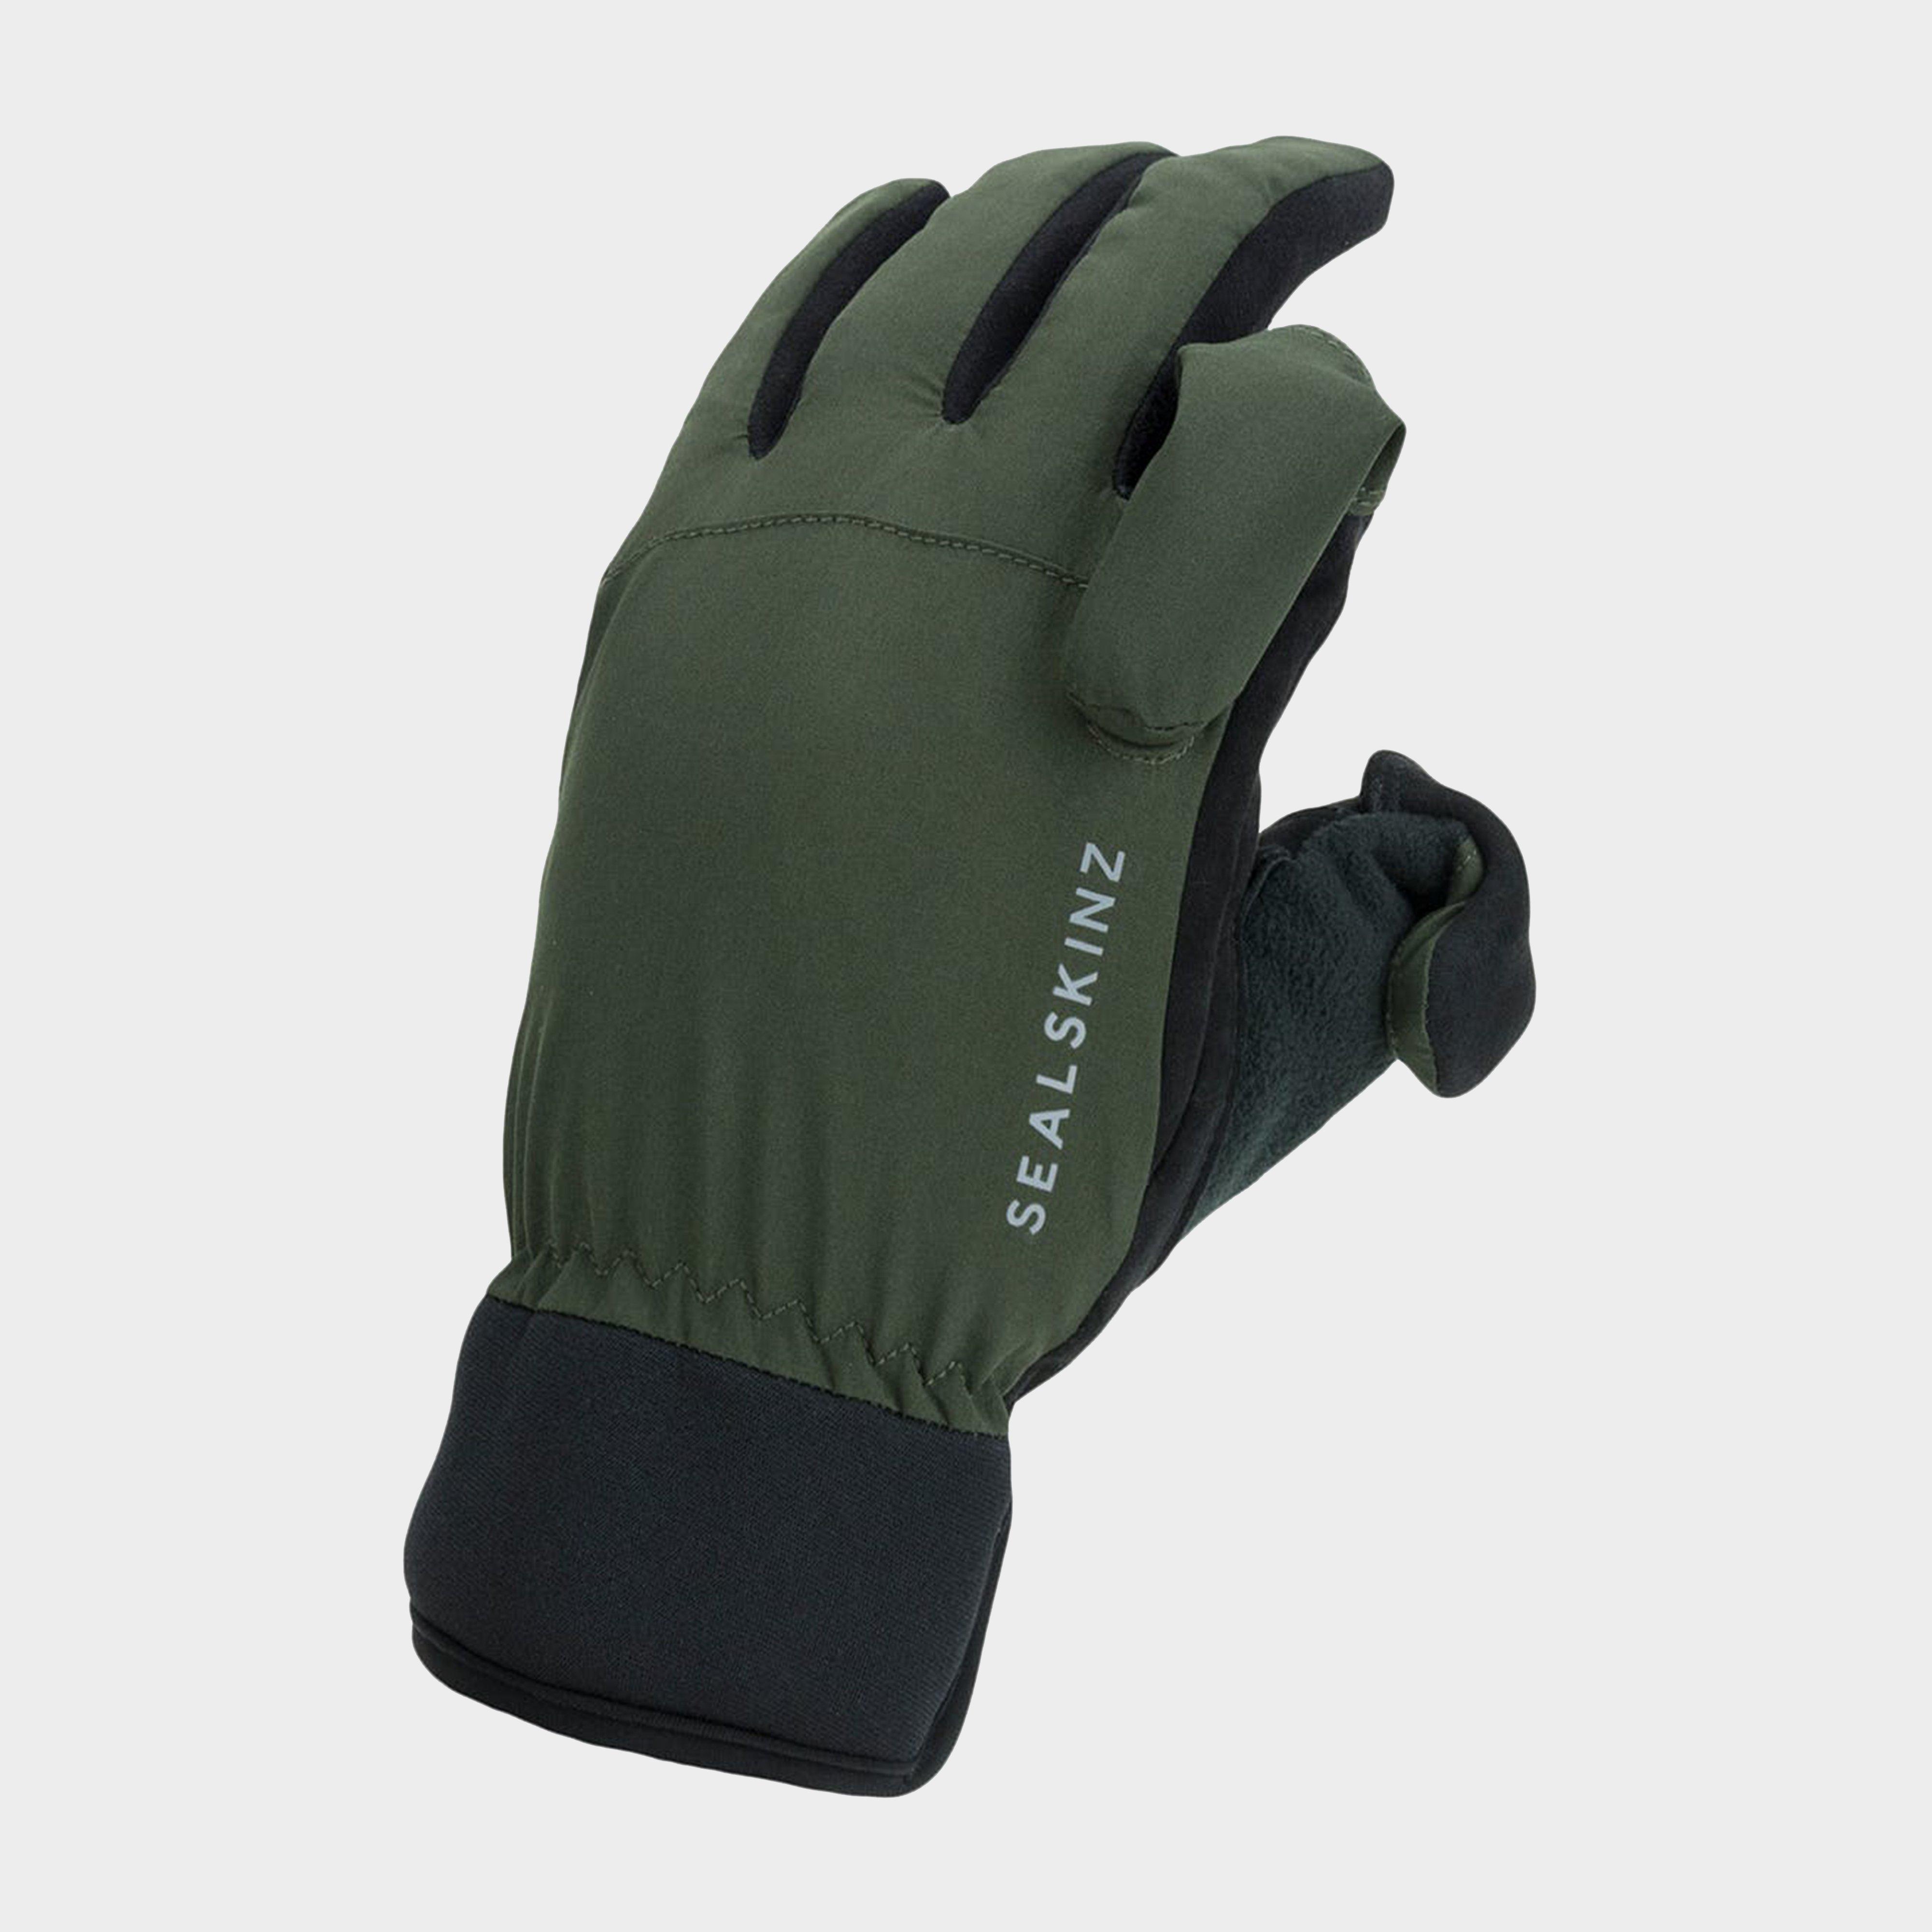  Sealskinz Waterproof All Weather Sporting Gloves, Green